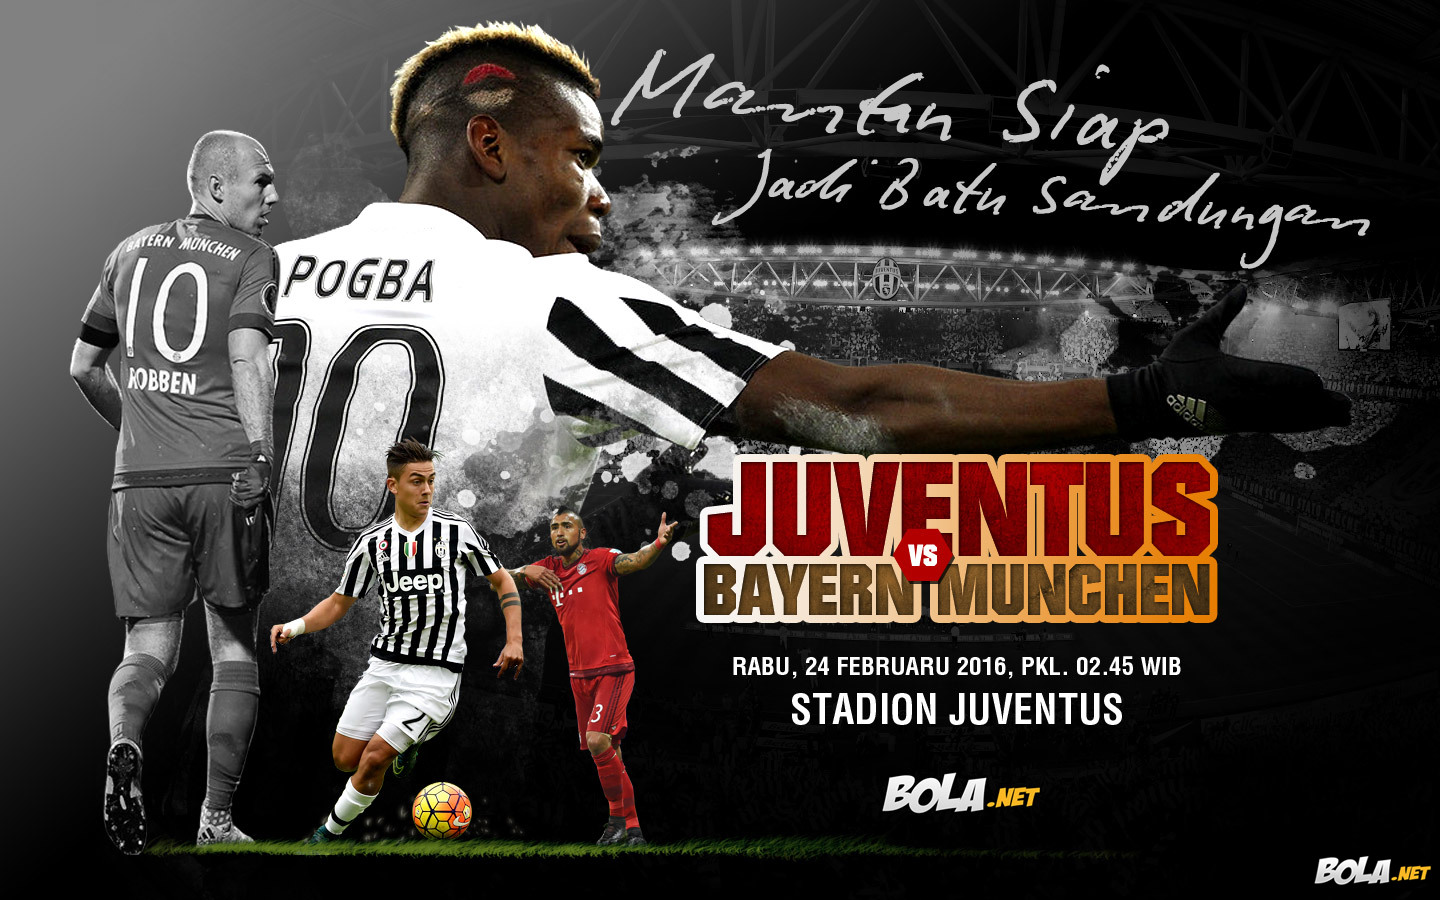 Deskripsi : Wallpaper Juventus Vs Bayern Munchen, size: 1440x900